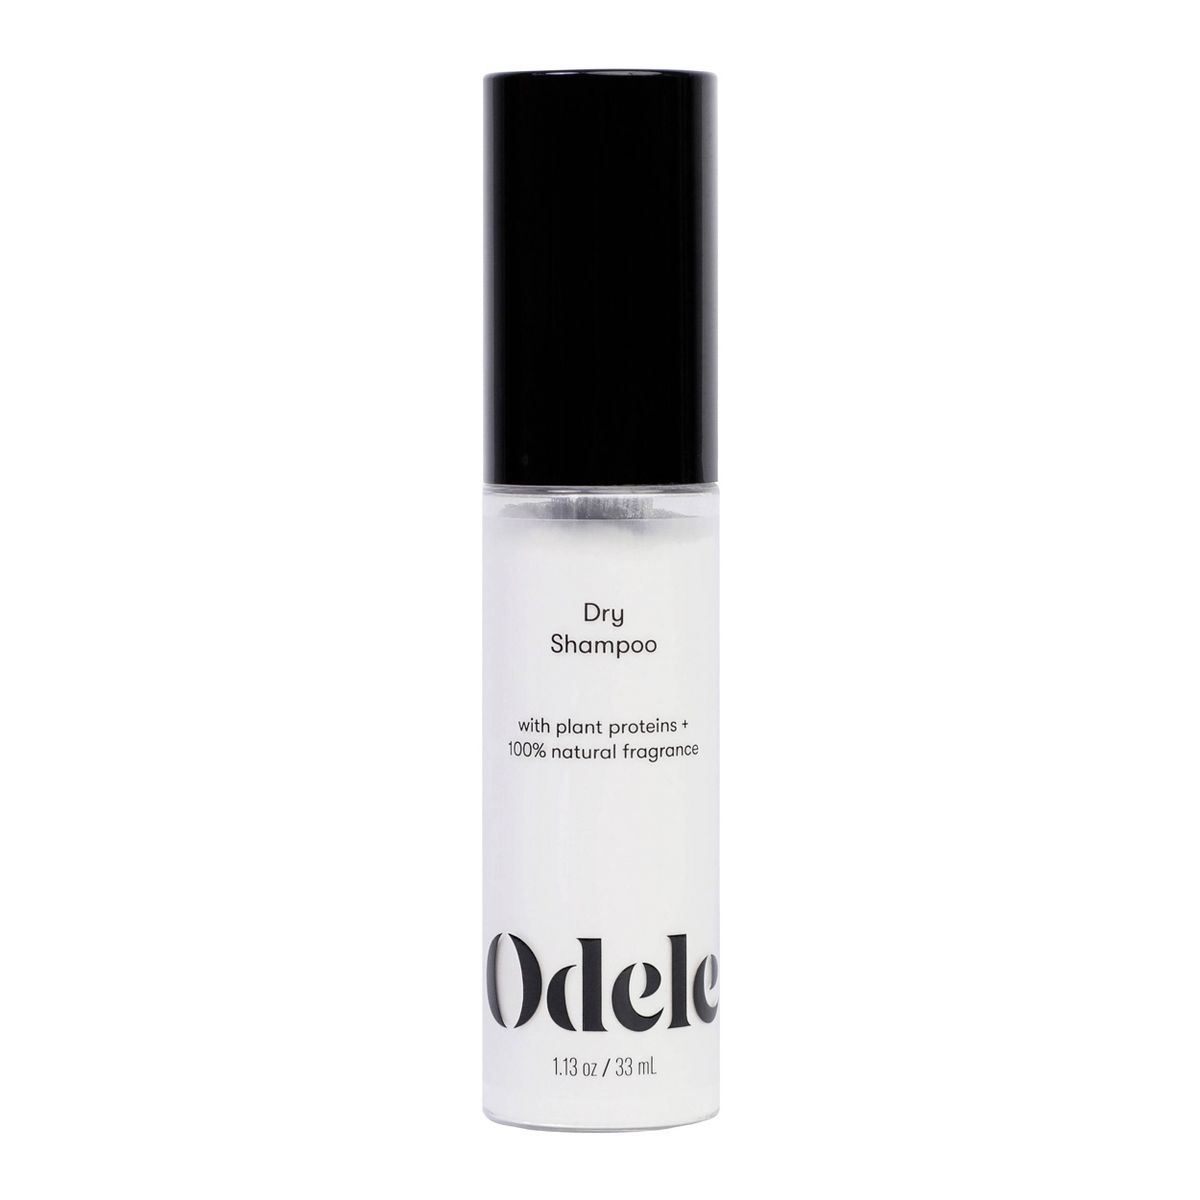 Odele Dry Shampoo Powder for Oil Control + Volume - 1.13 oz | Target